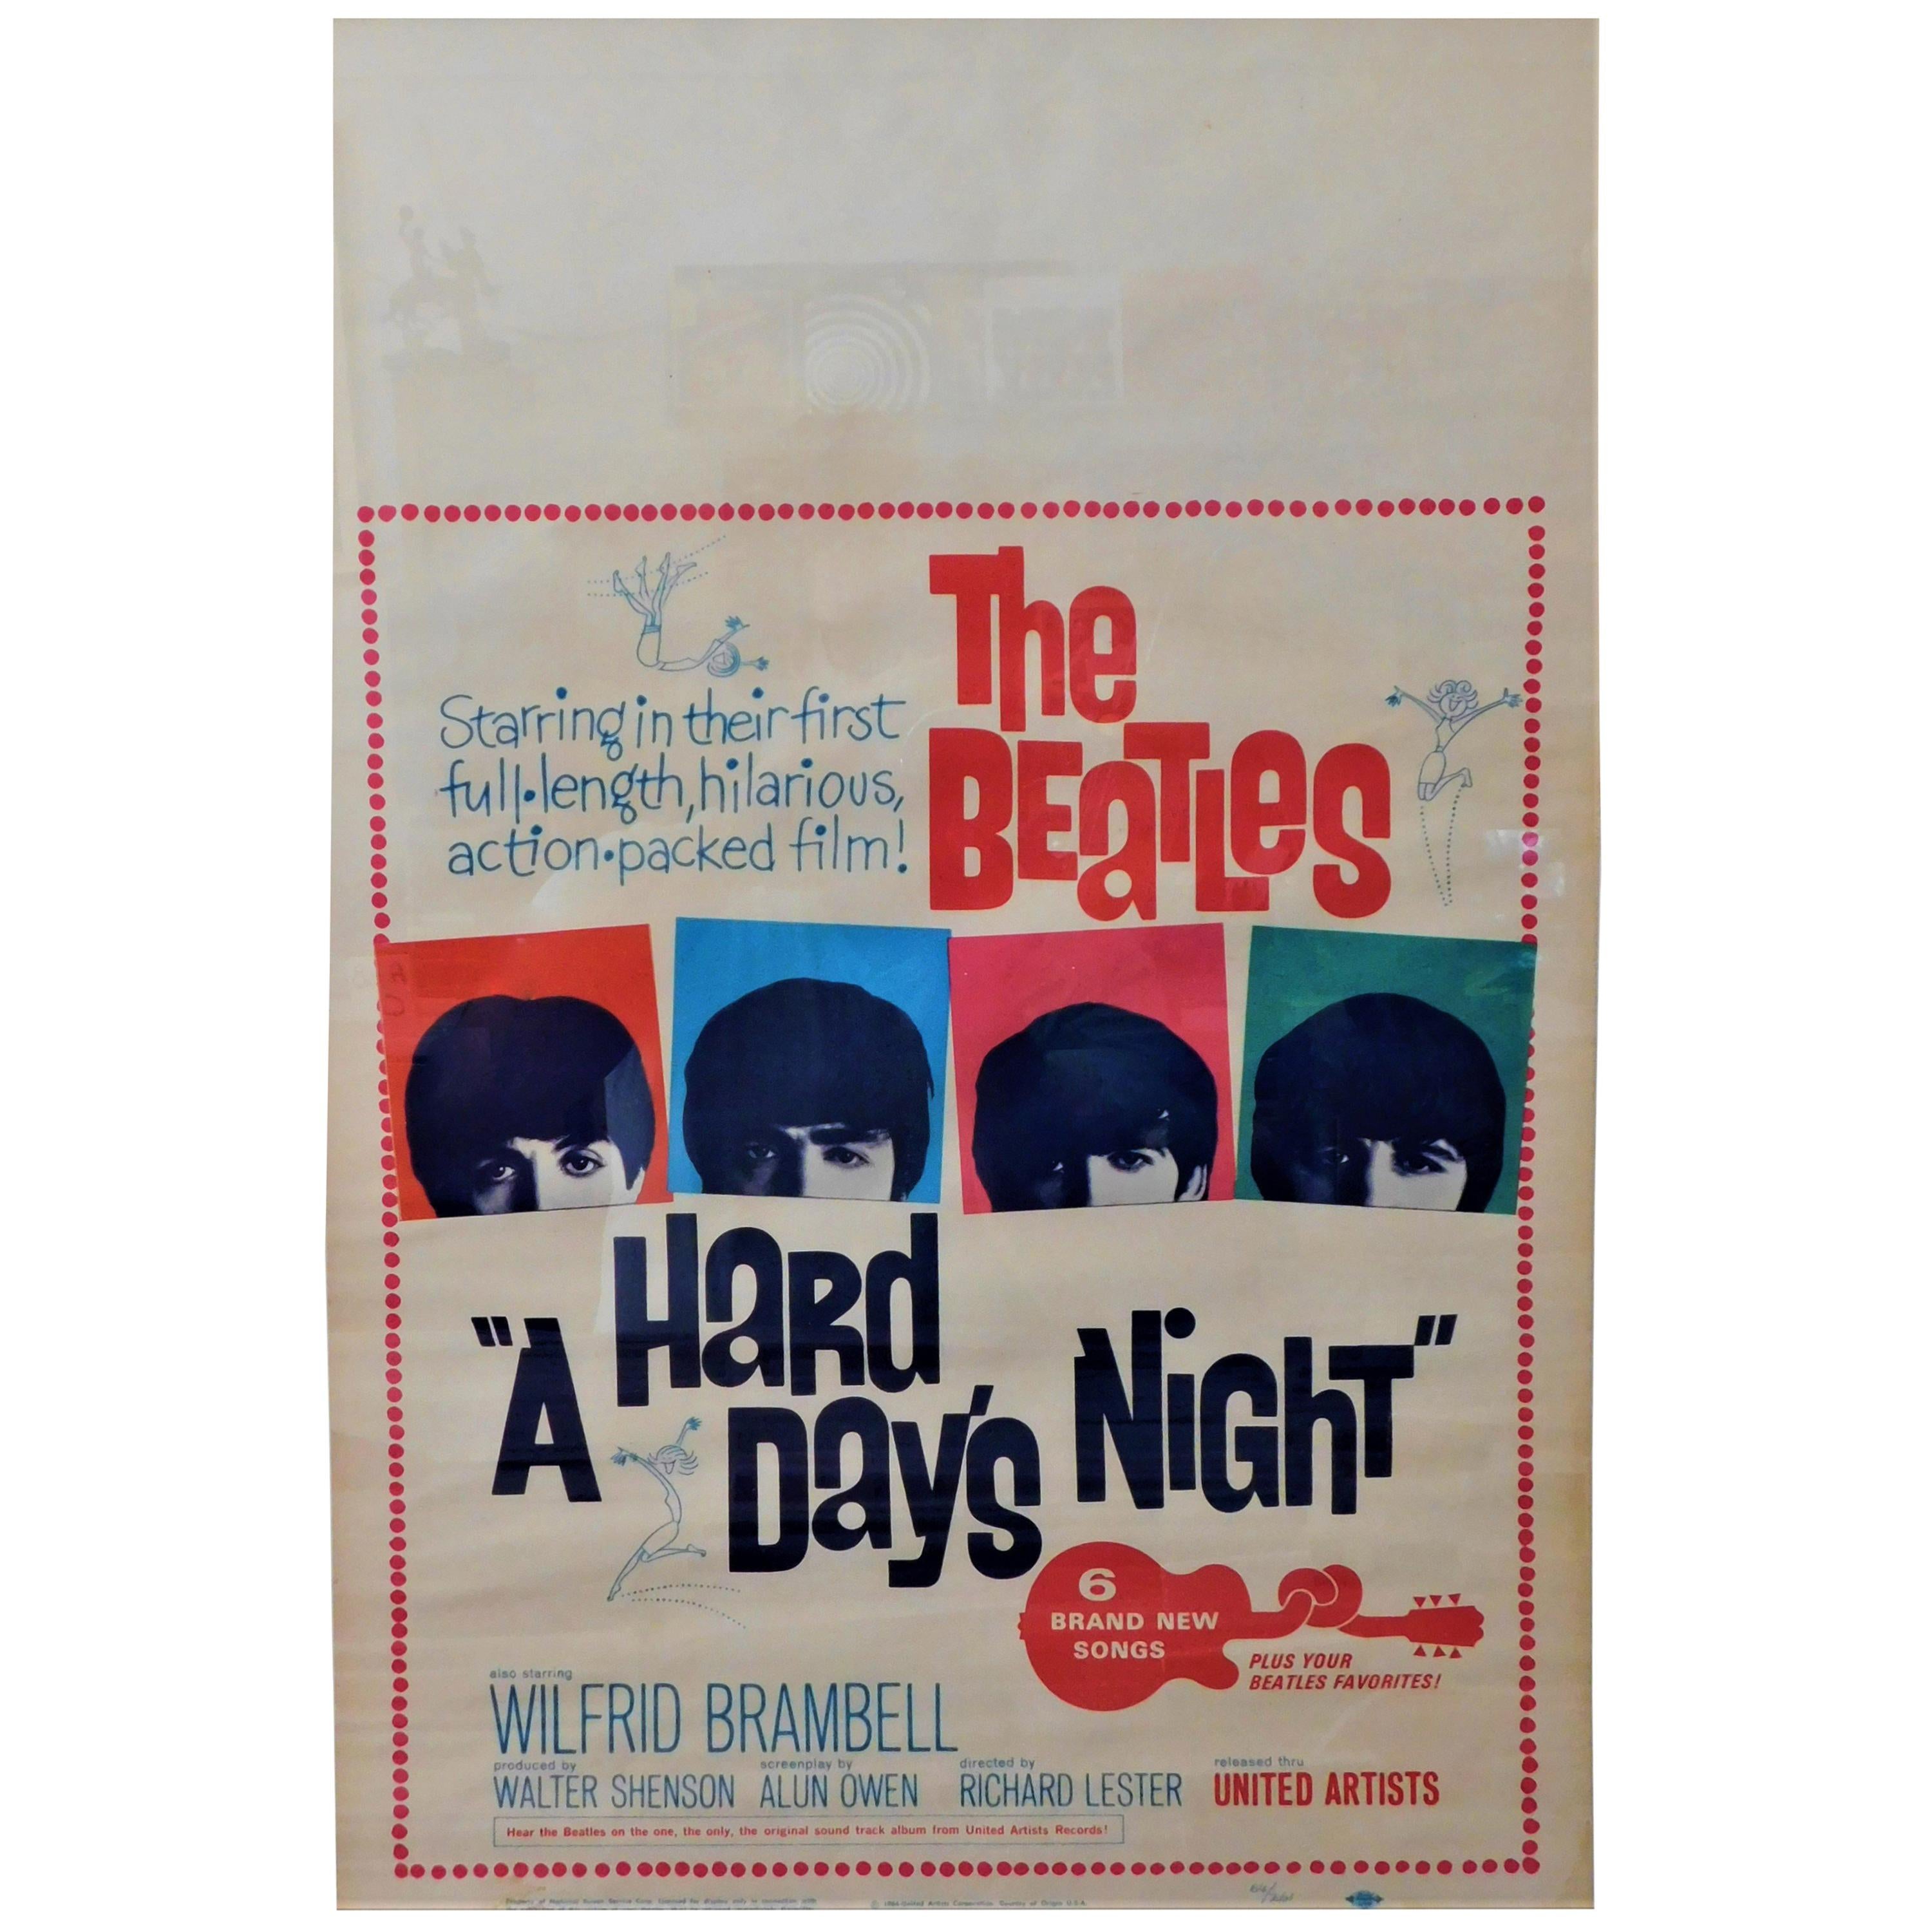 The Beatles Original a Hard Days Night Window Card